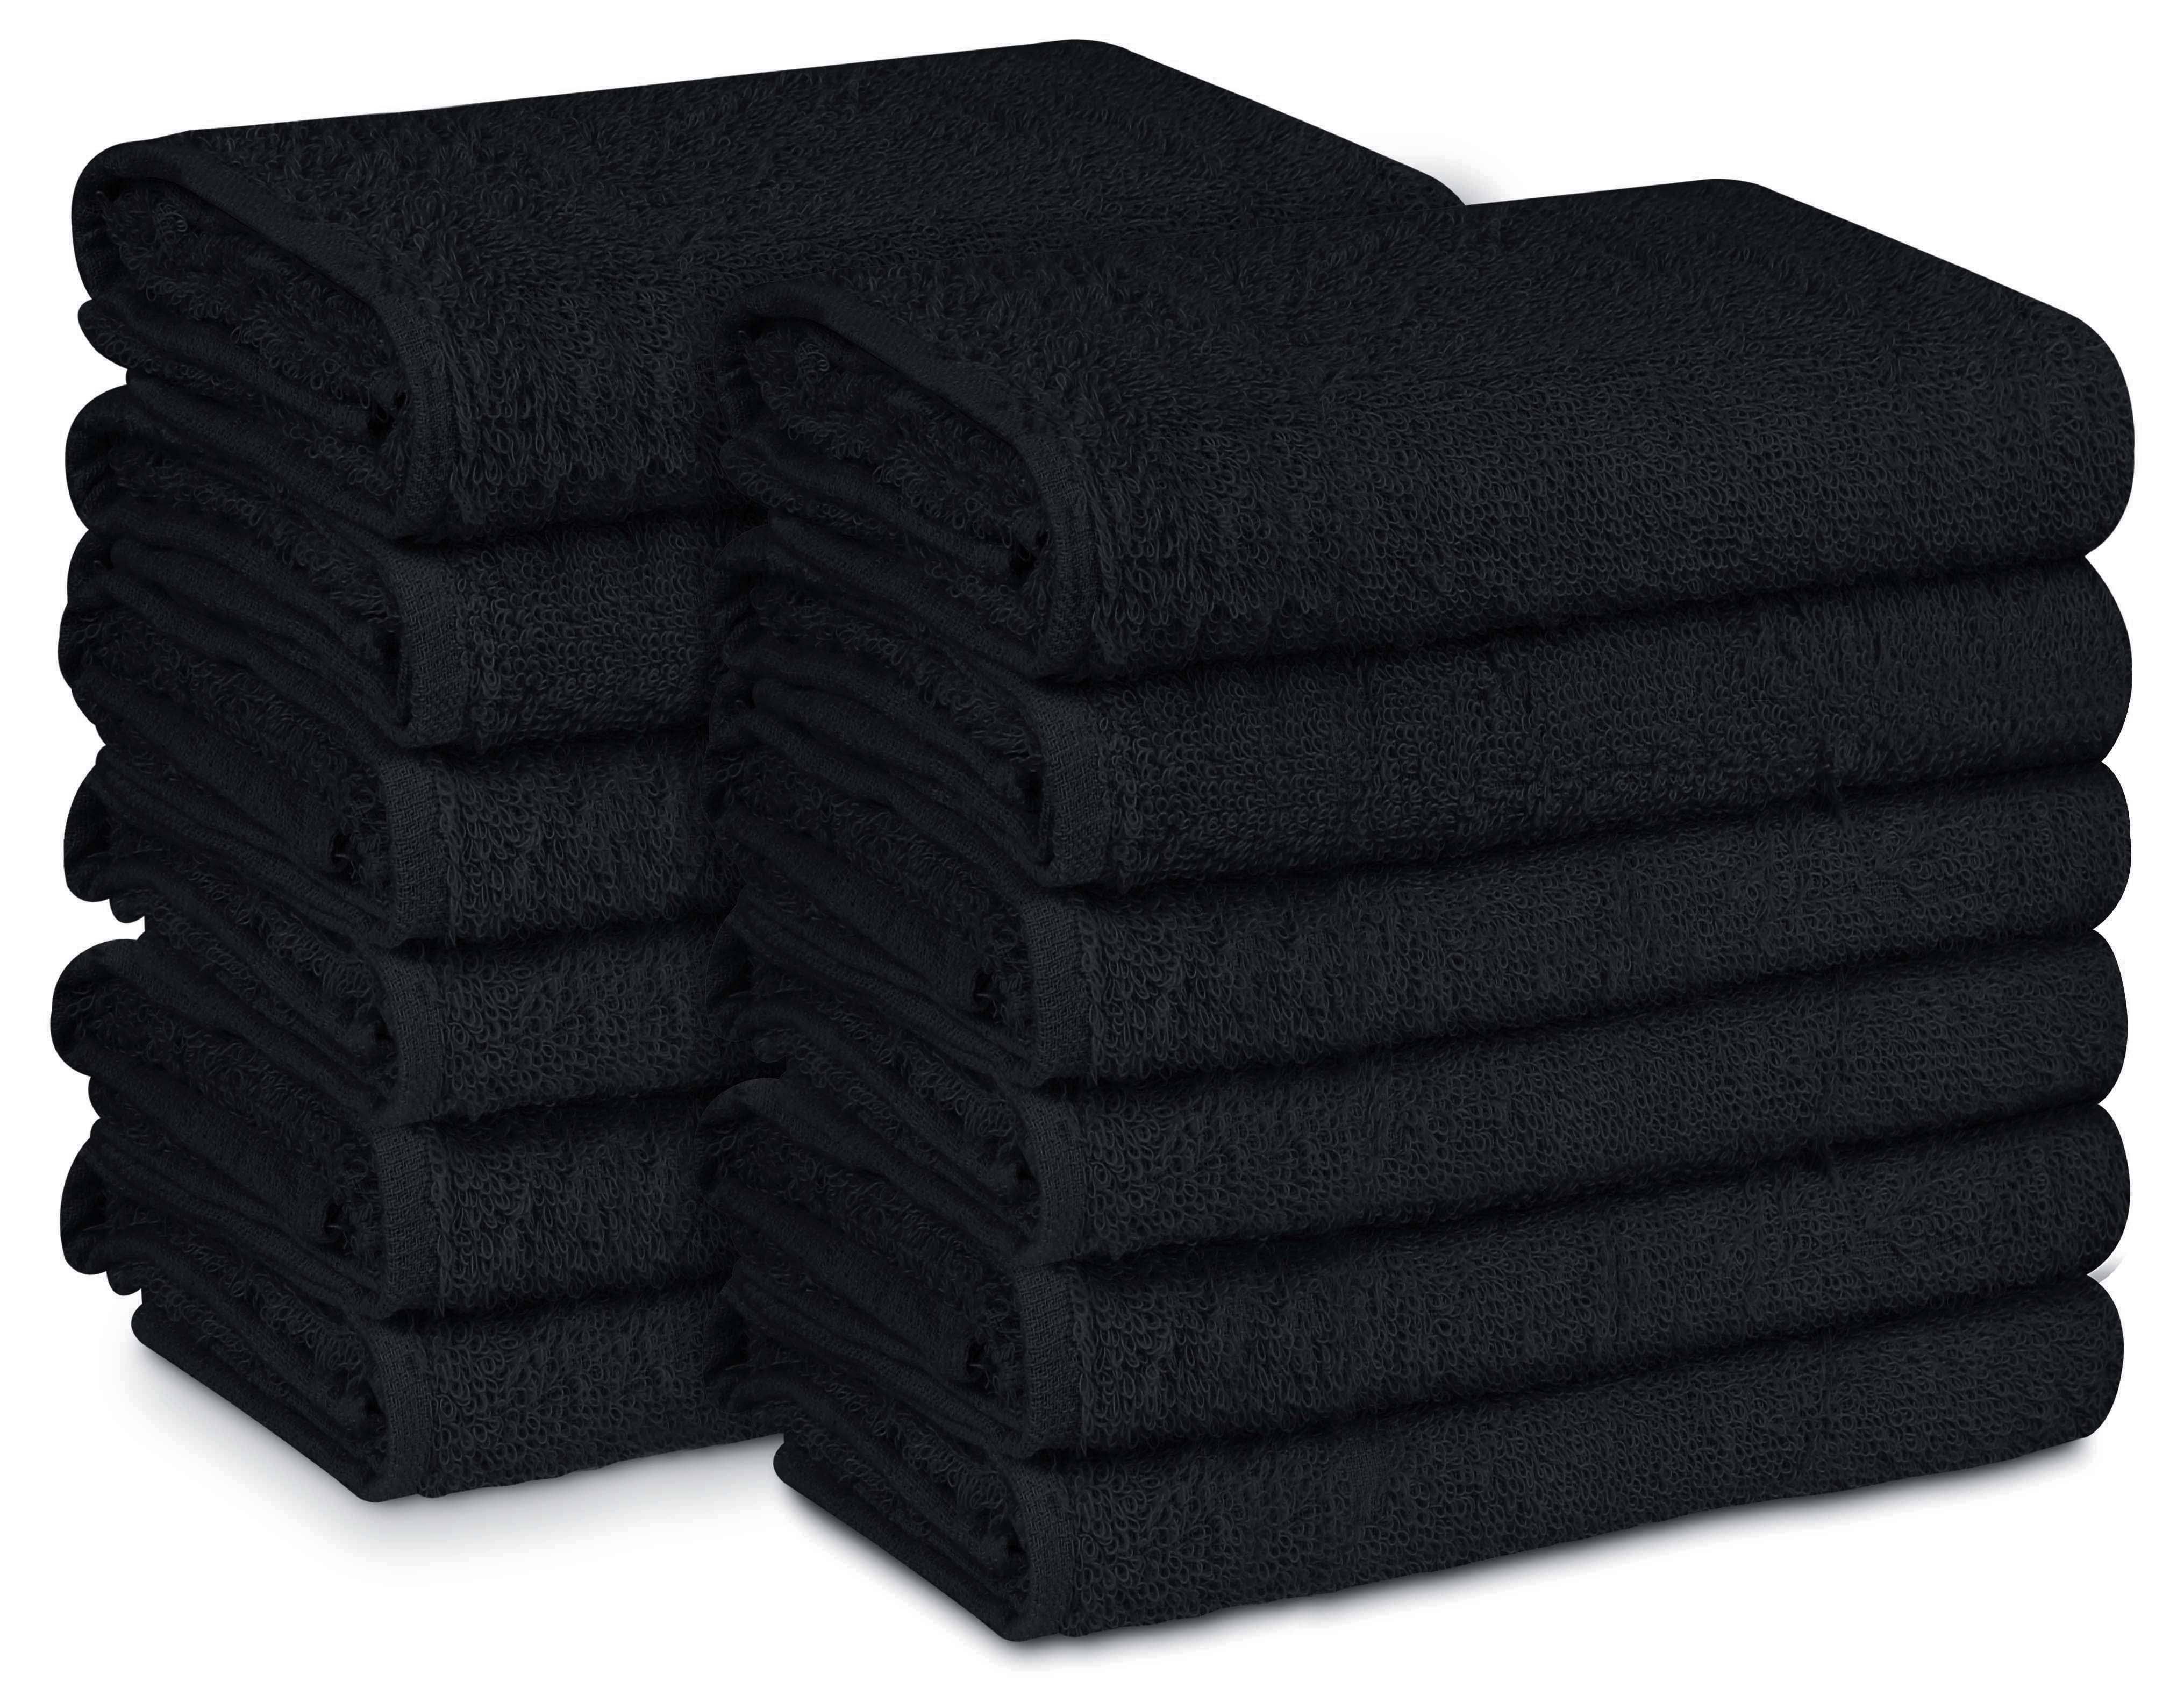 24 new black salon collection towels gym spa hair hand towels 16x27 bleach guard 